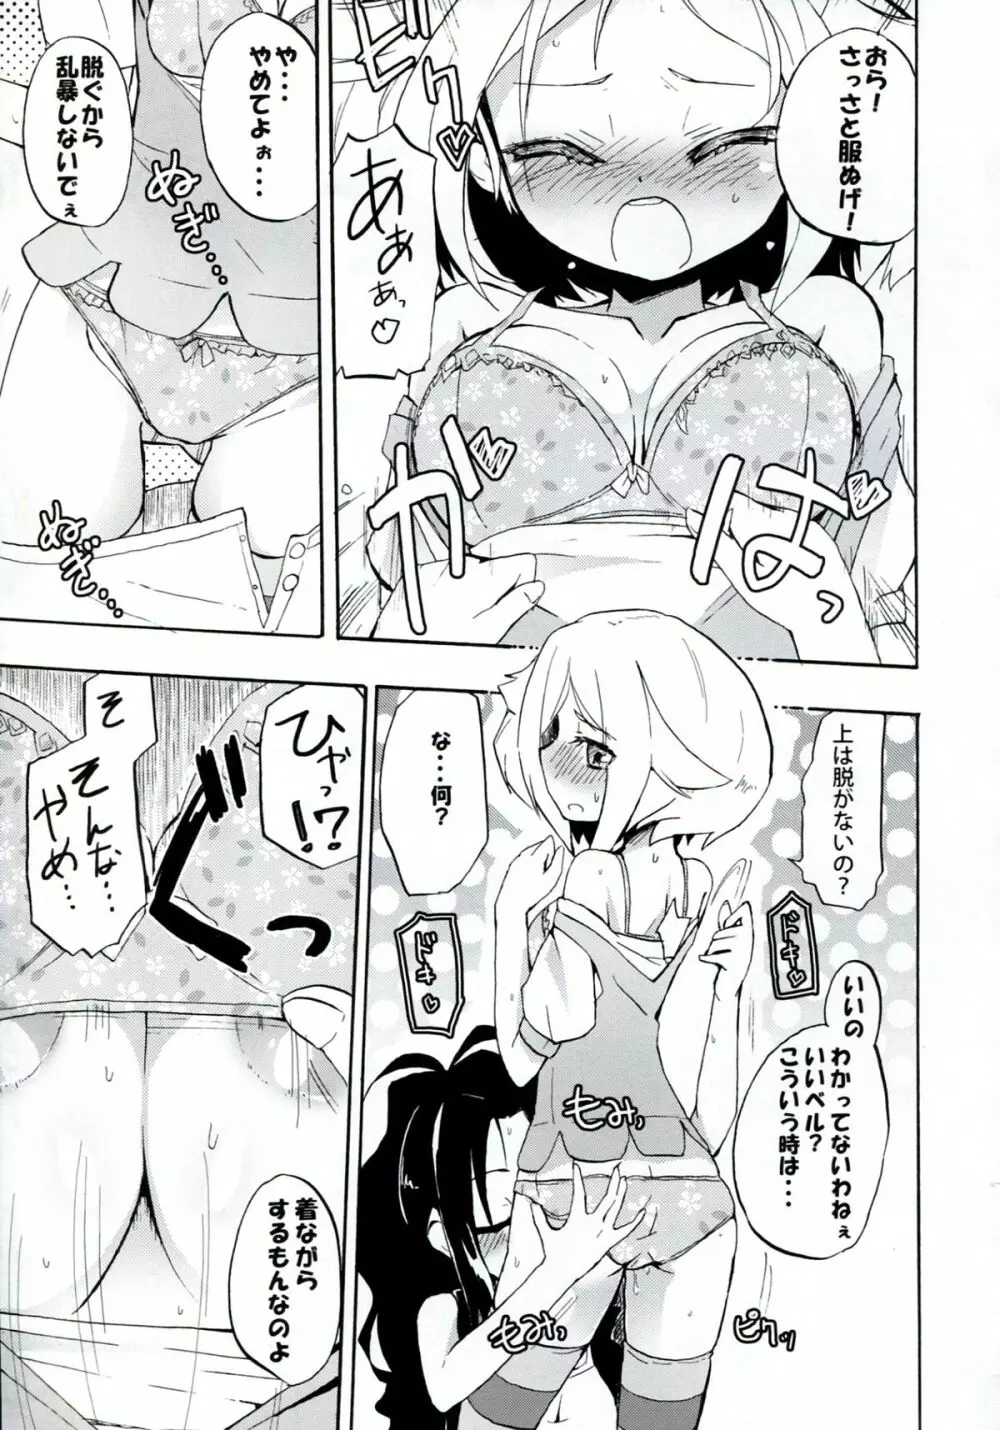 Homuraya Milk ★ Collection 2 - page31